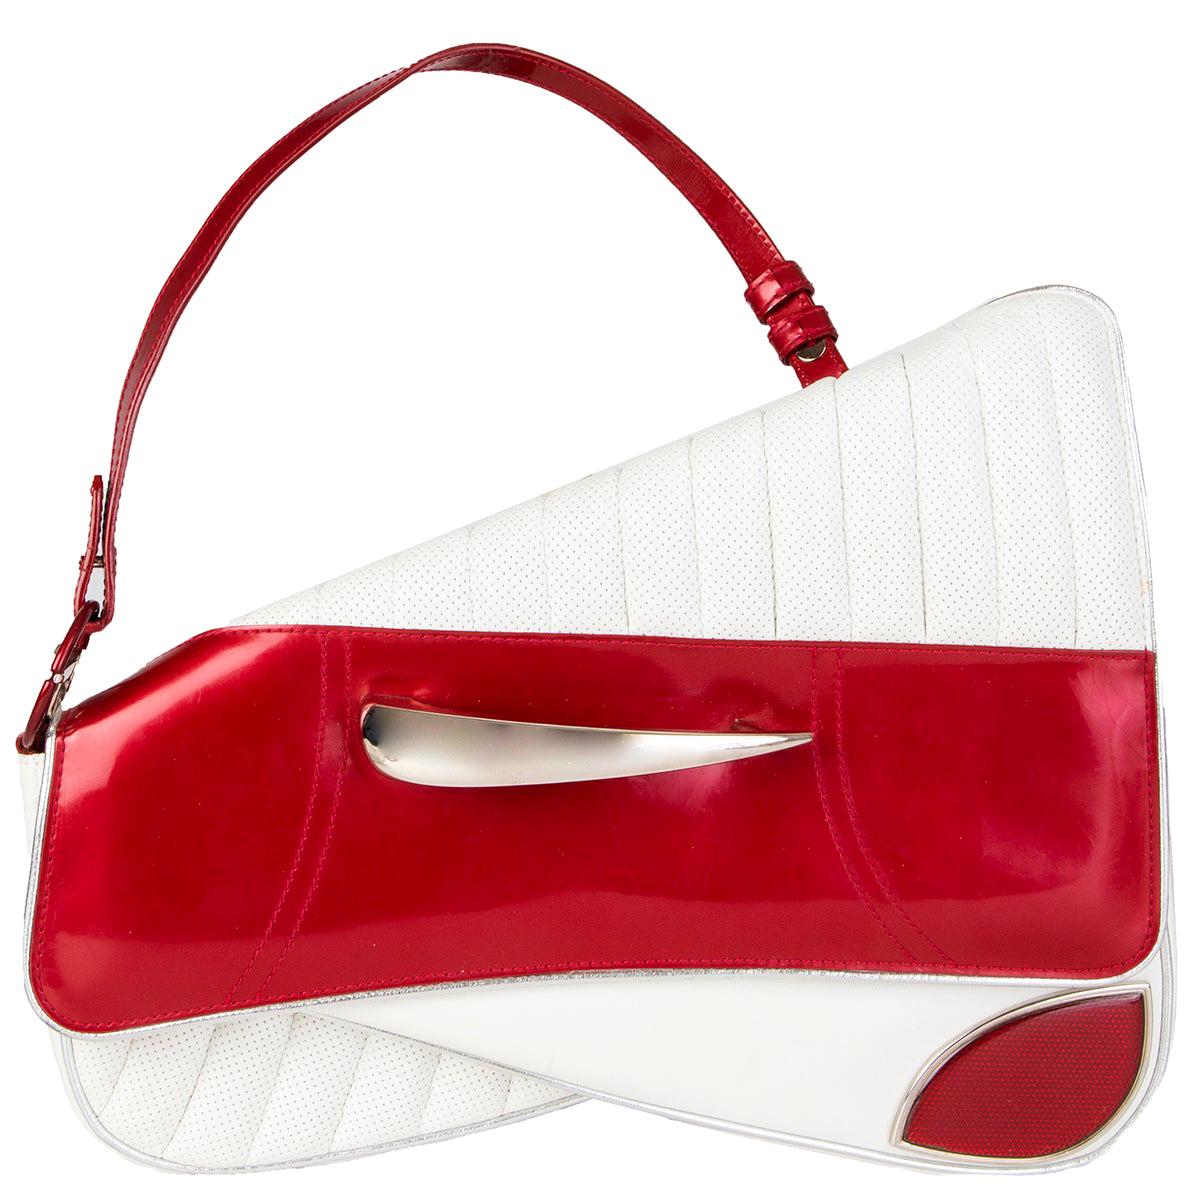 CHRISTIAN DIOR white leather & red patent CADILLAC SADDLE Handbag